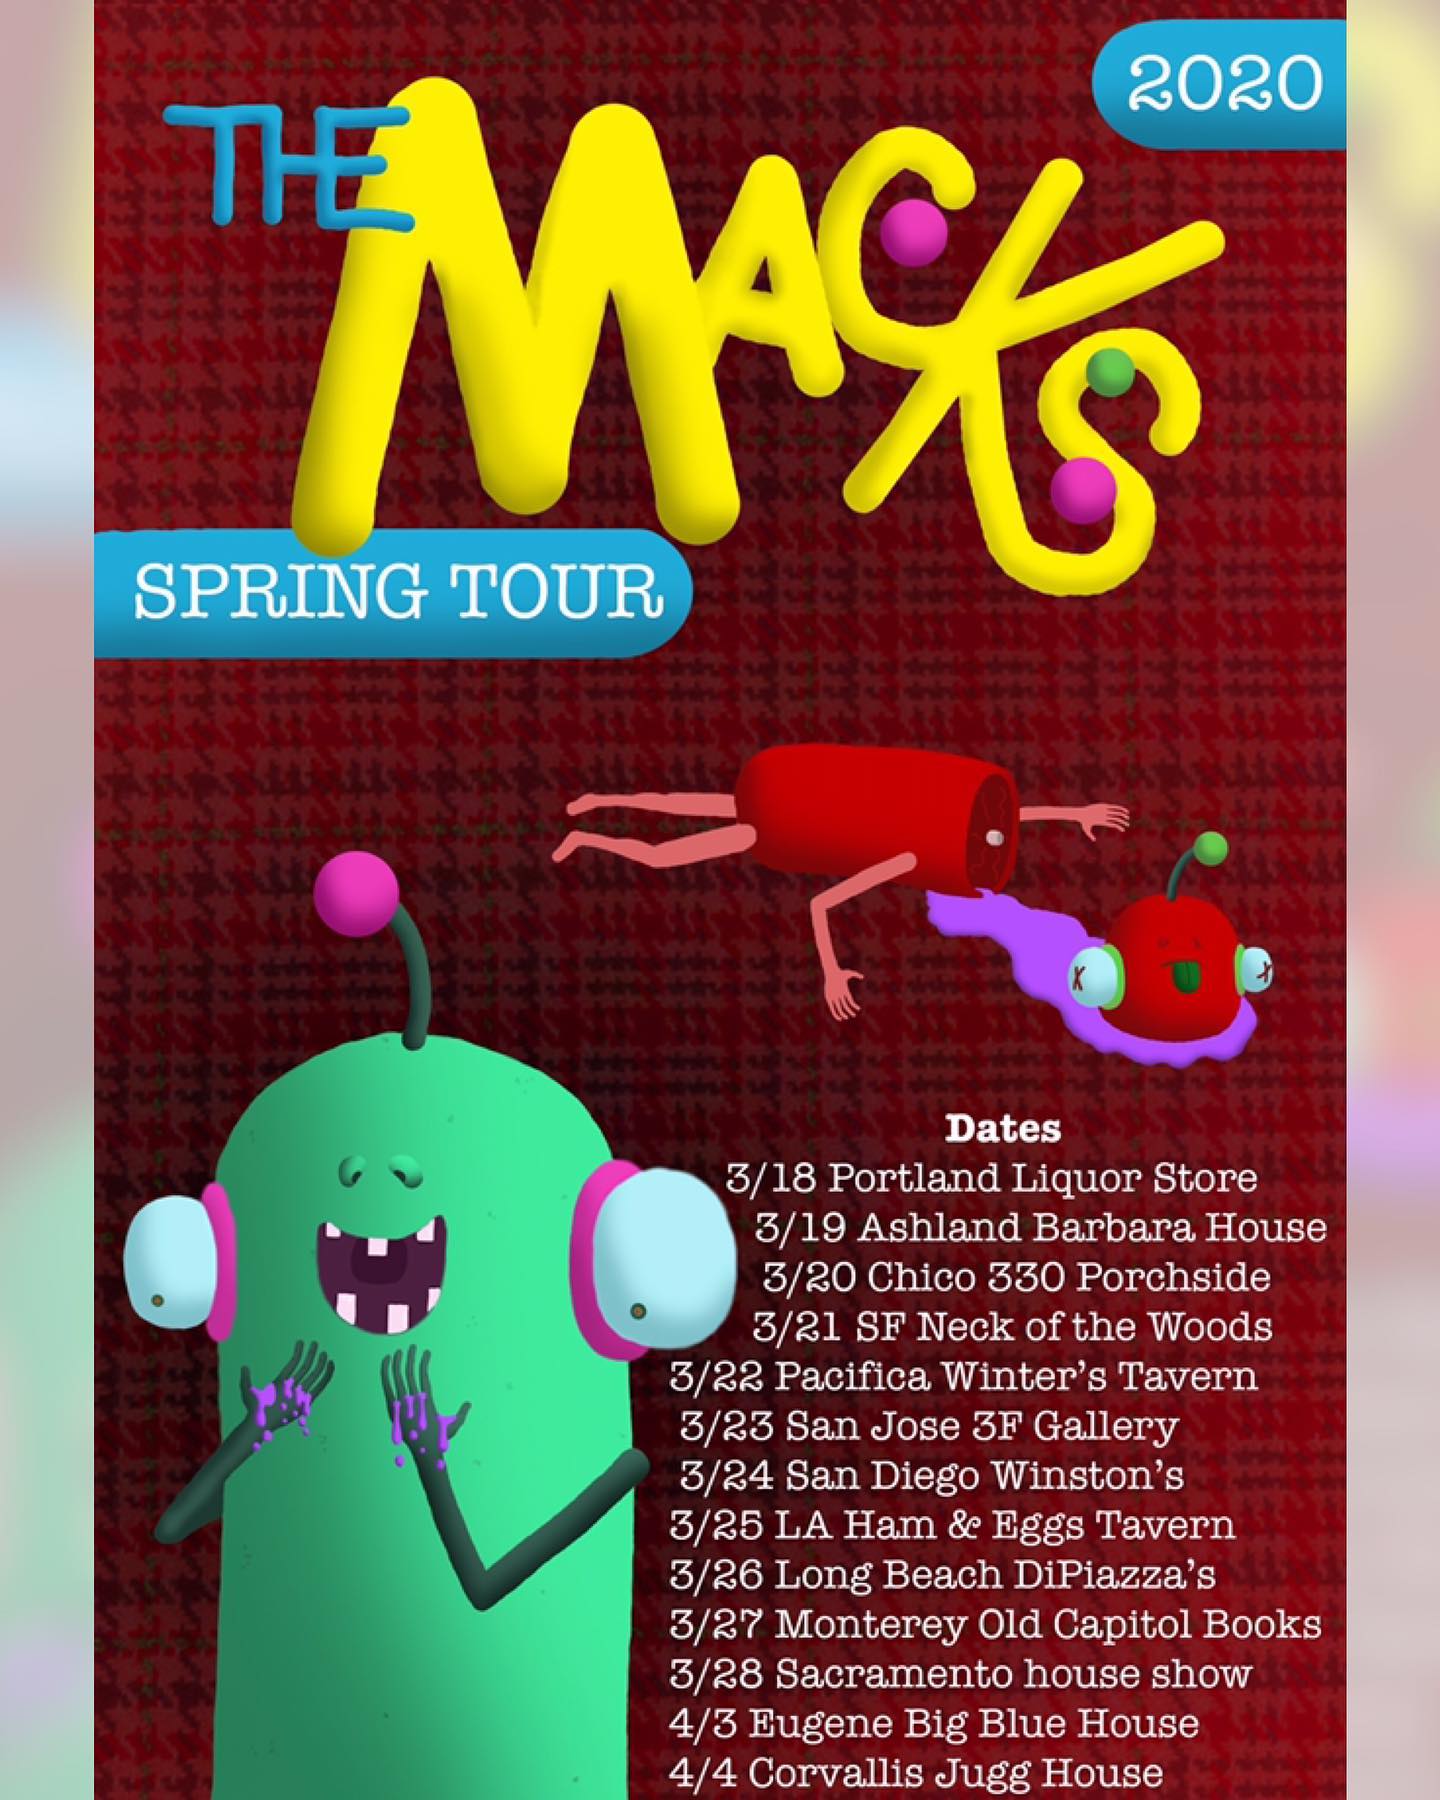 The Macks Spring Tour dates